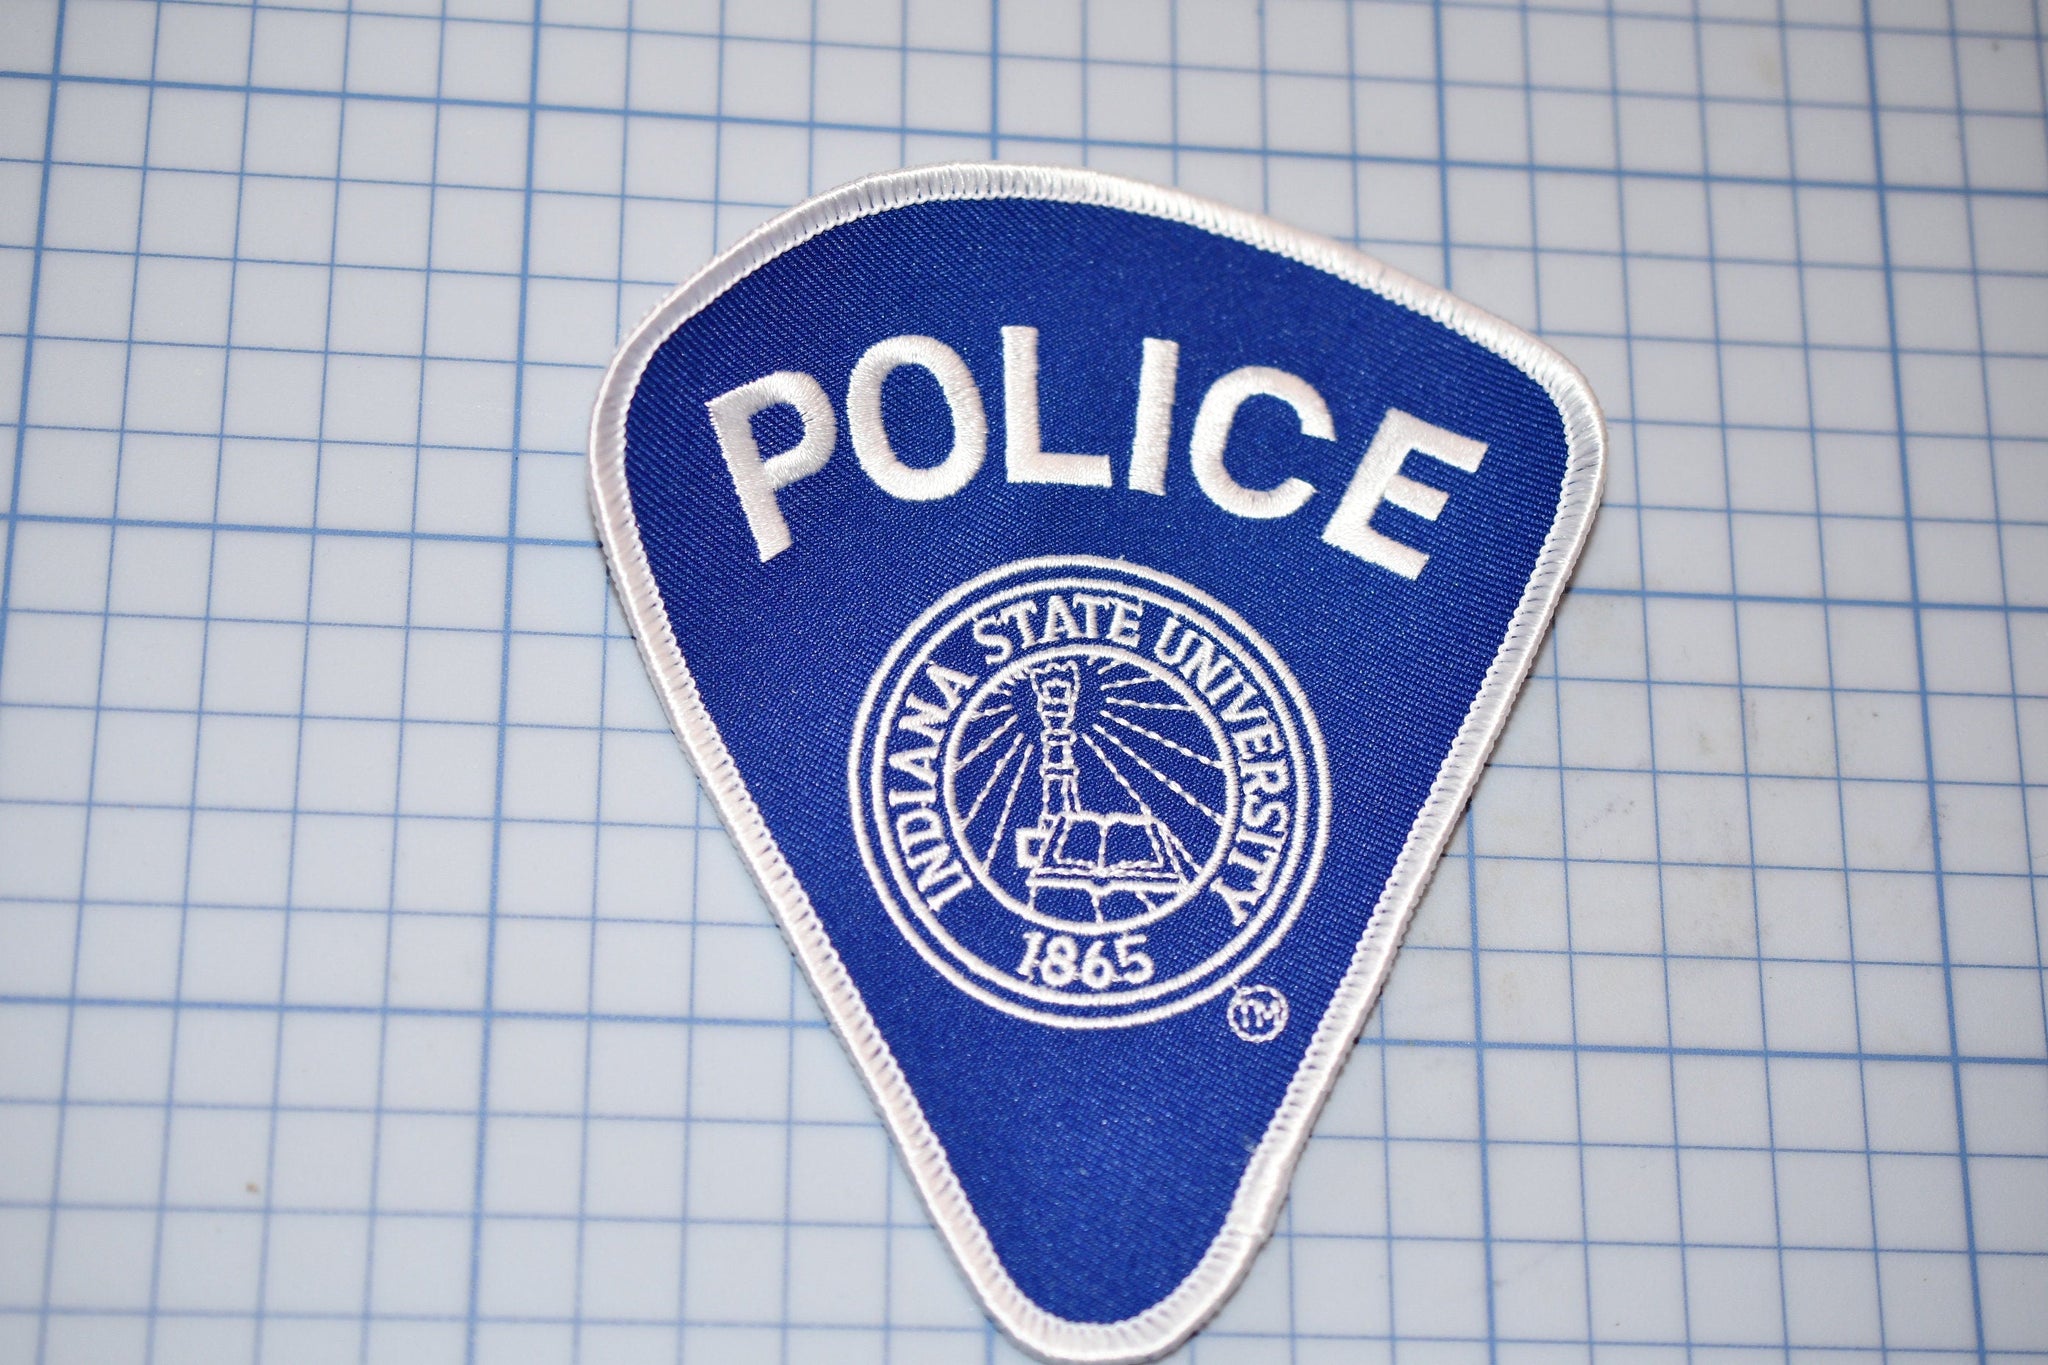 Indiana State University Police Patch (S3-269)